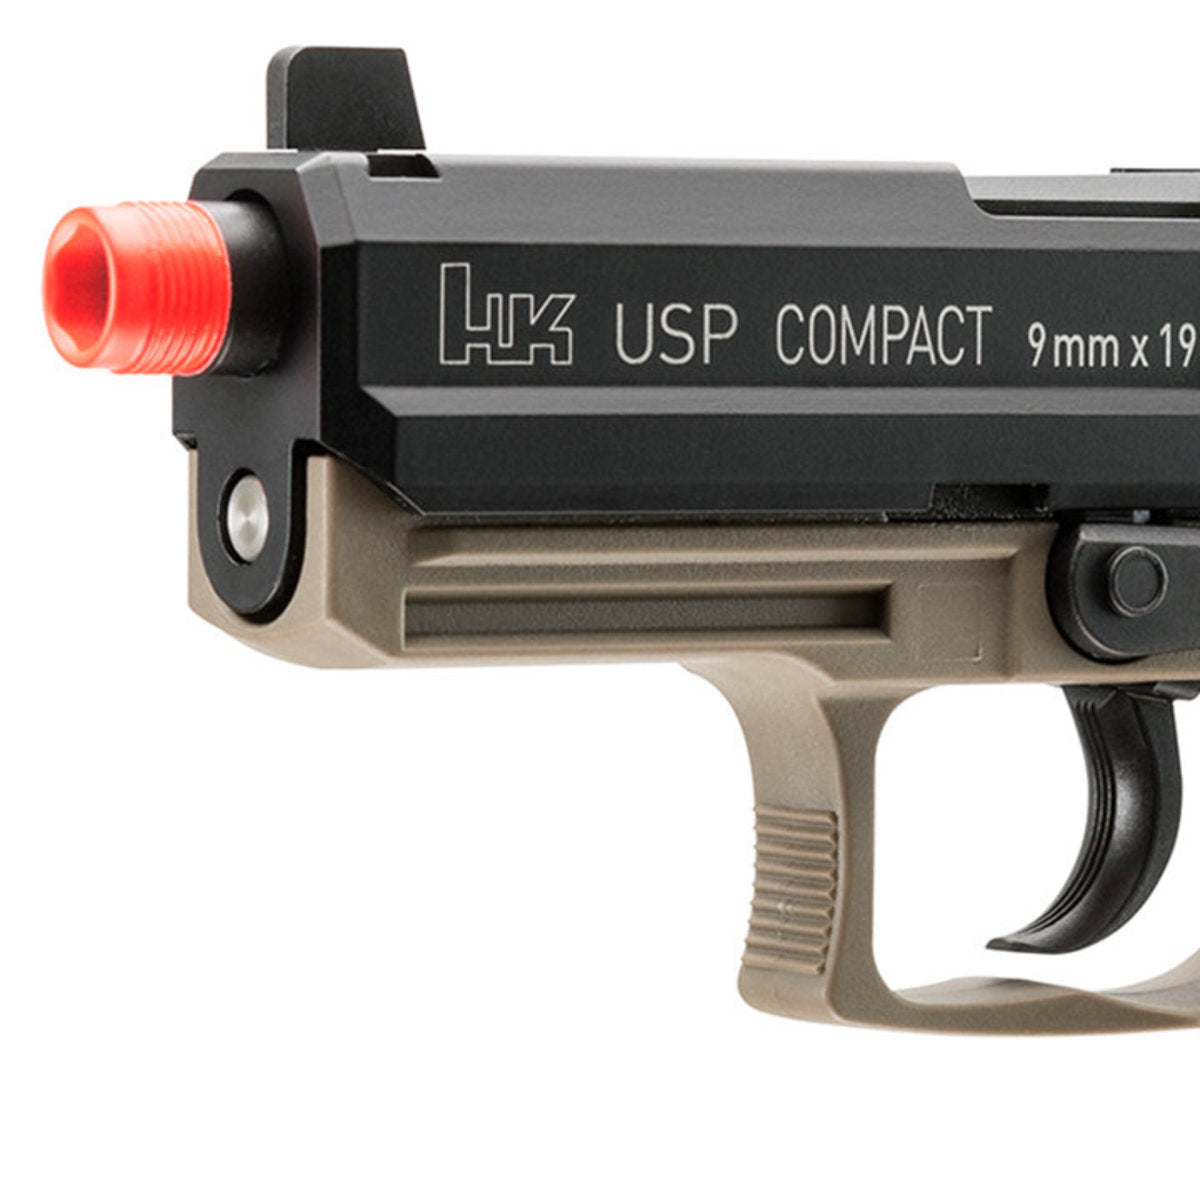 Umarex H&K Usp Compact Tactical Gbb Airsoft Pistol (Kwa)